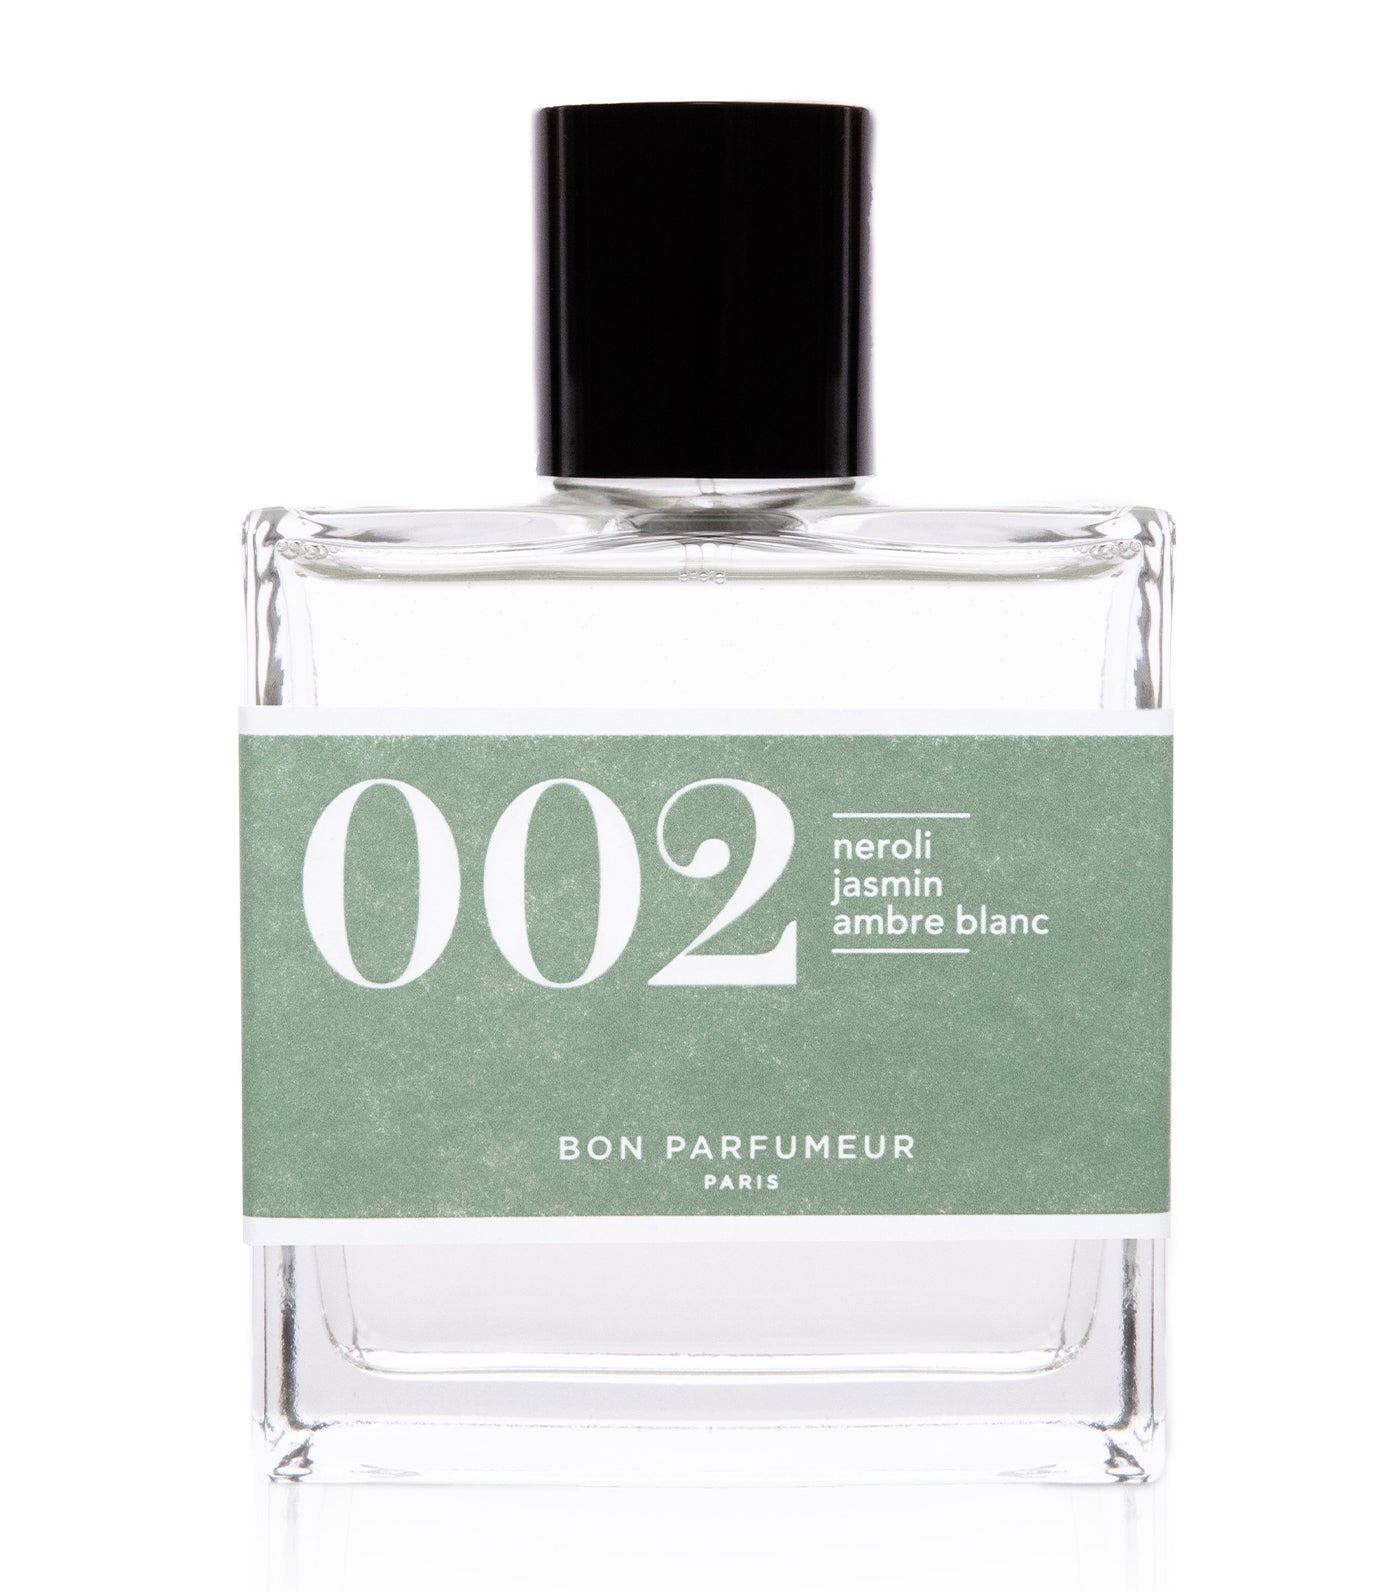 Eau de parfum 002 : neroli, jasmine and white amber